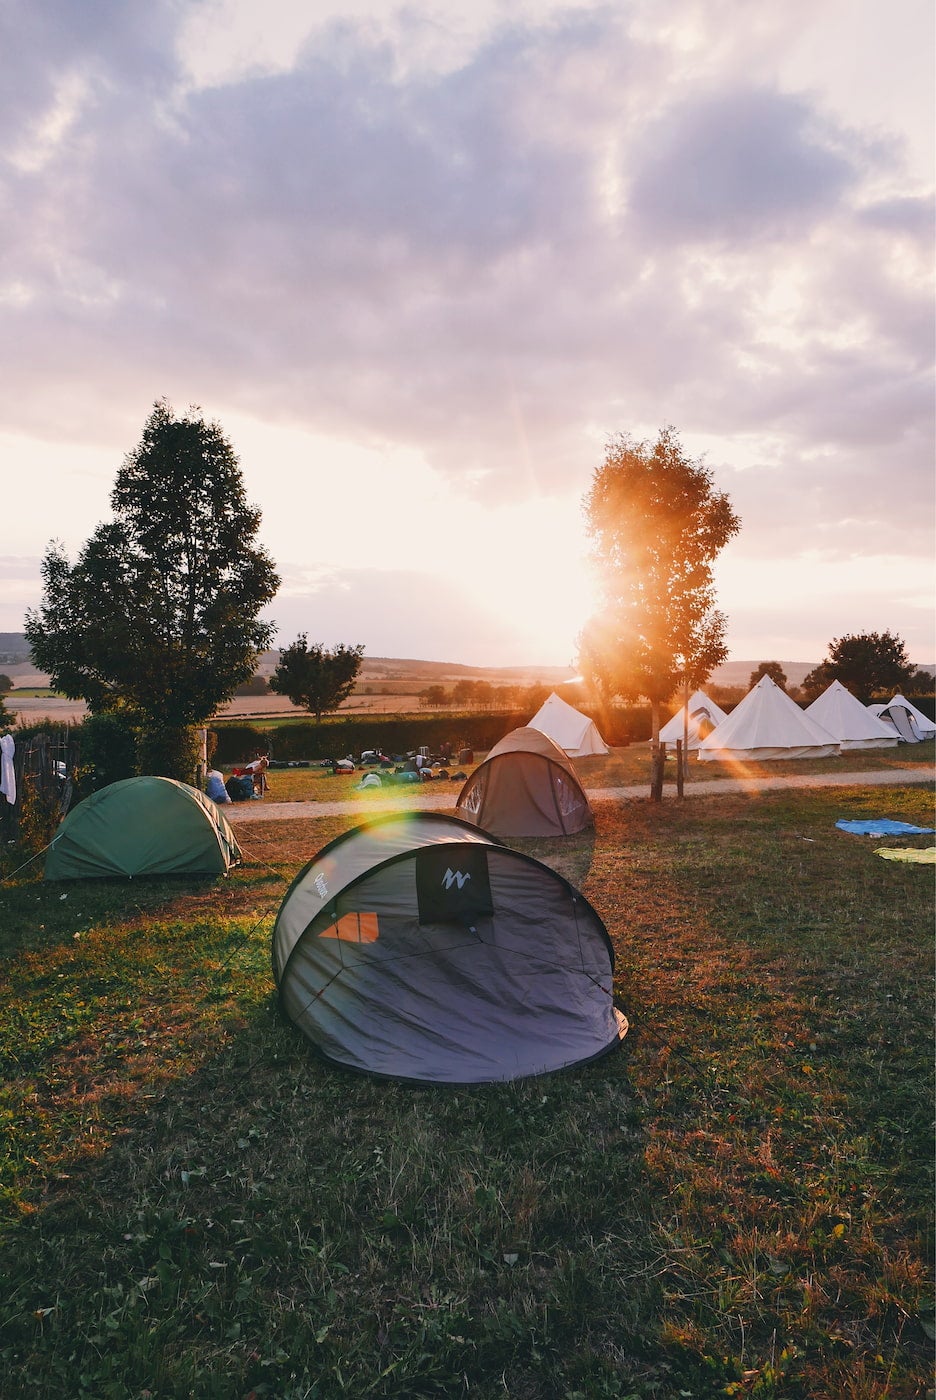 Festival campsite in a field.